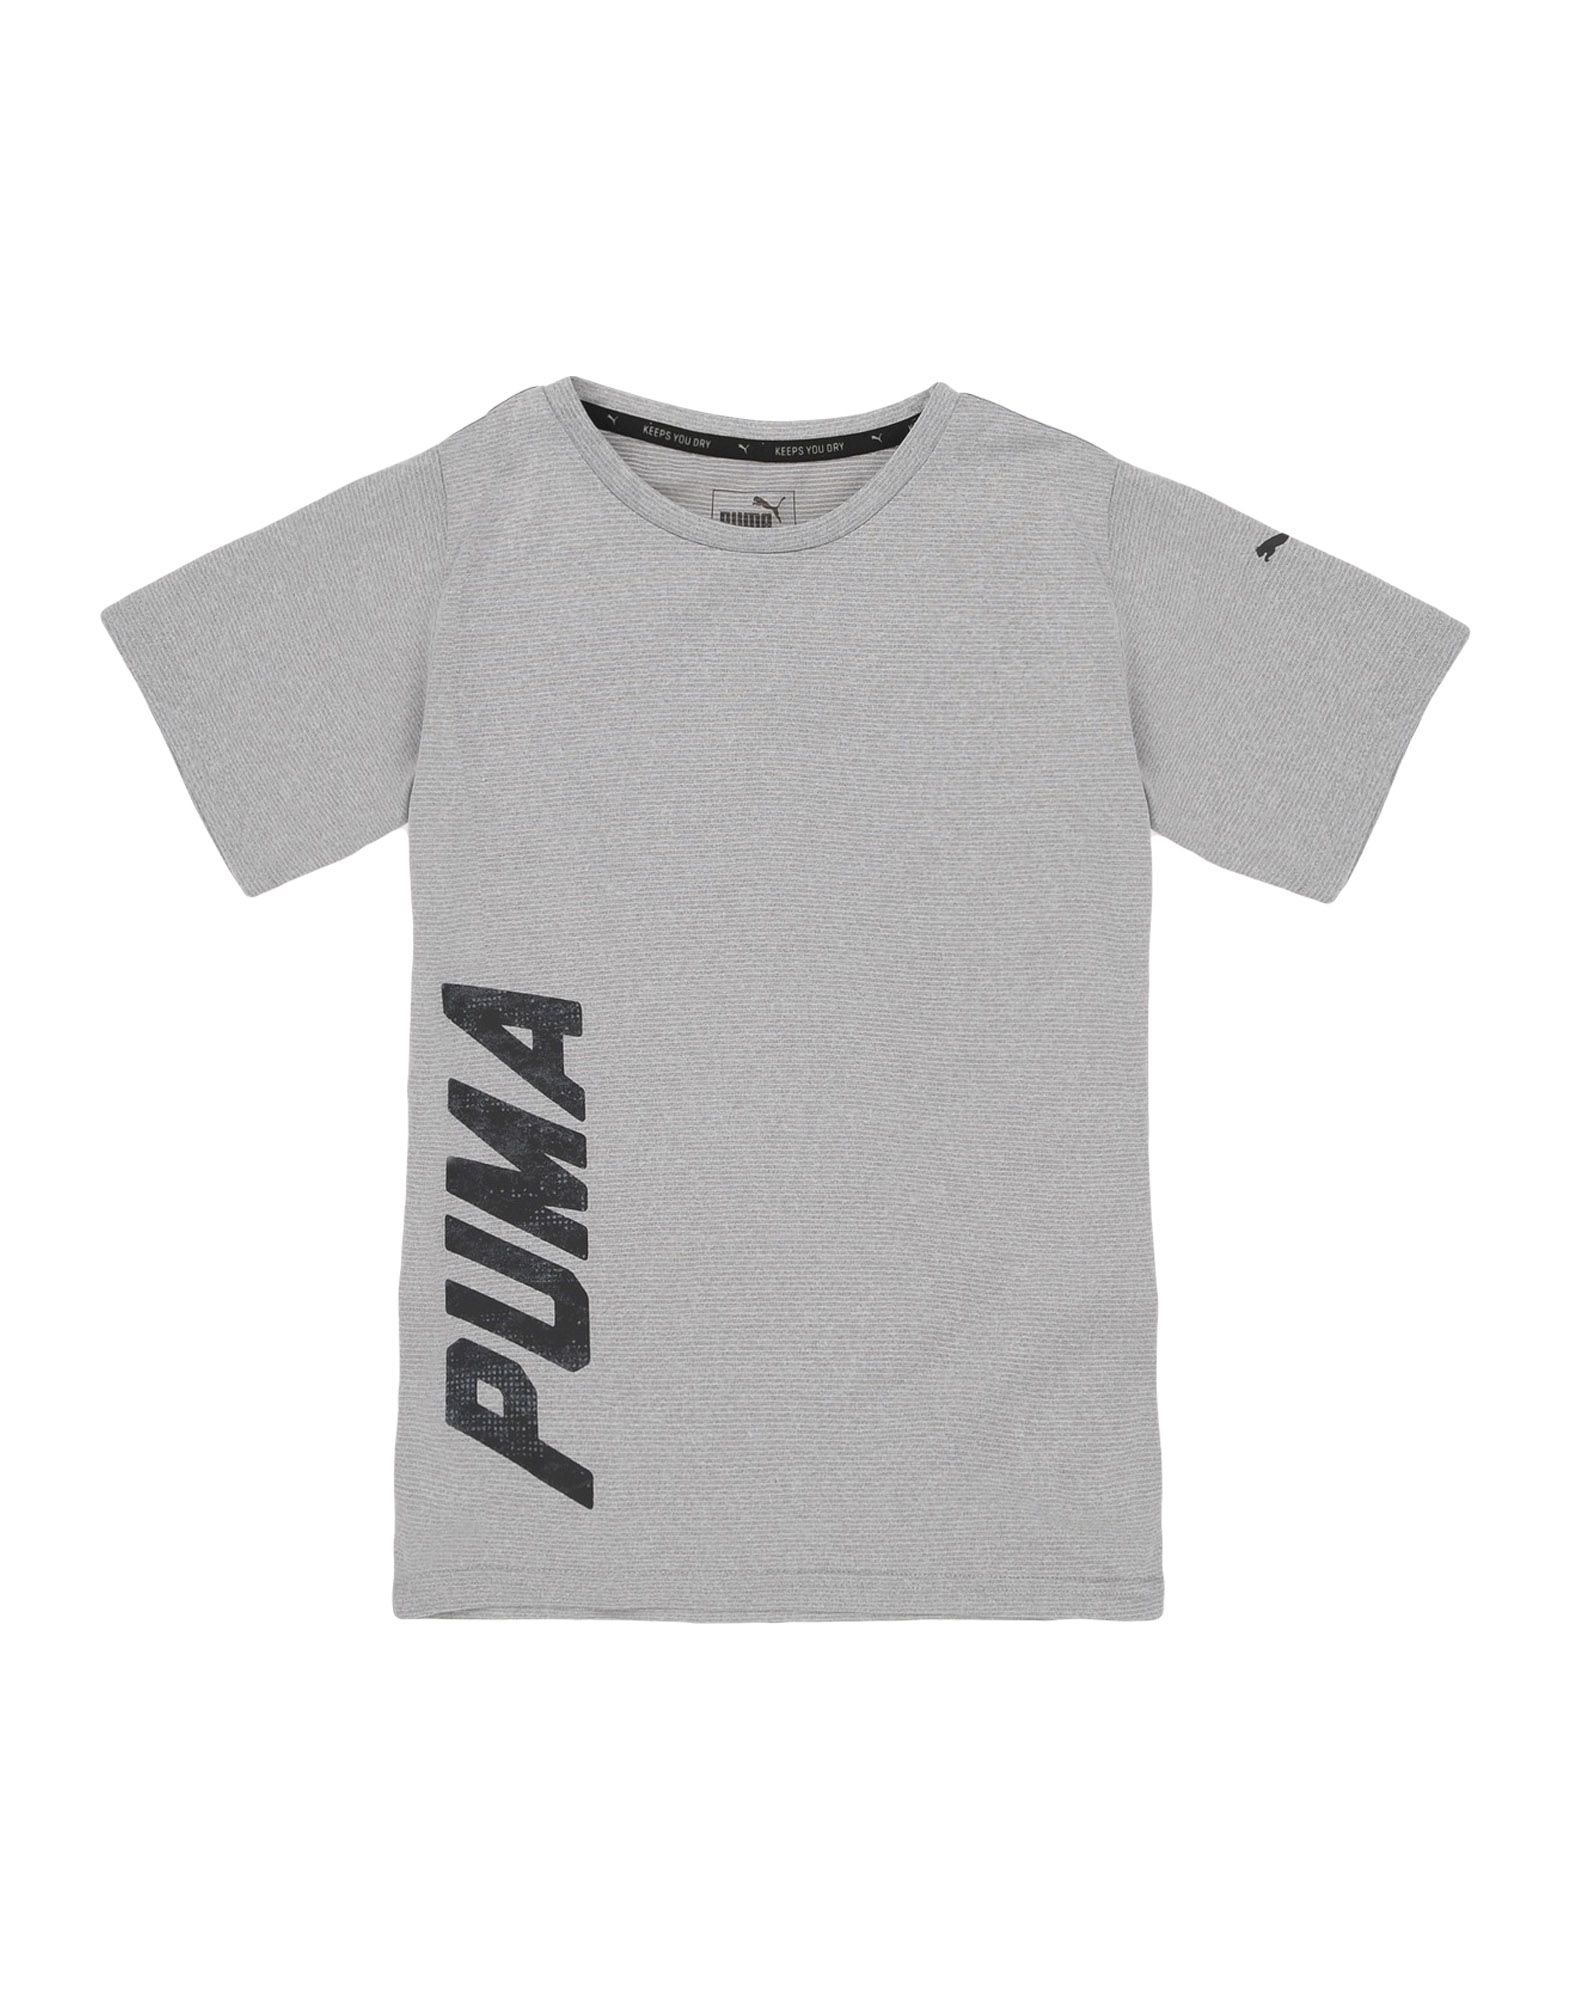 Puma Puma T Shirts From Yoox Com Shefinds